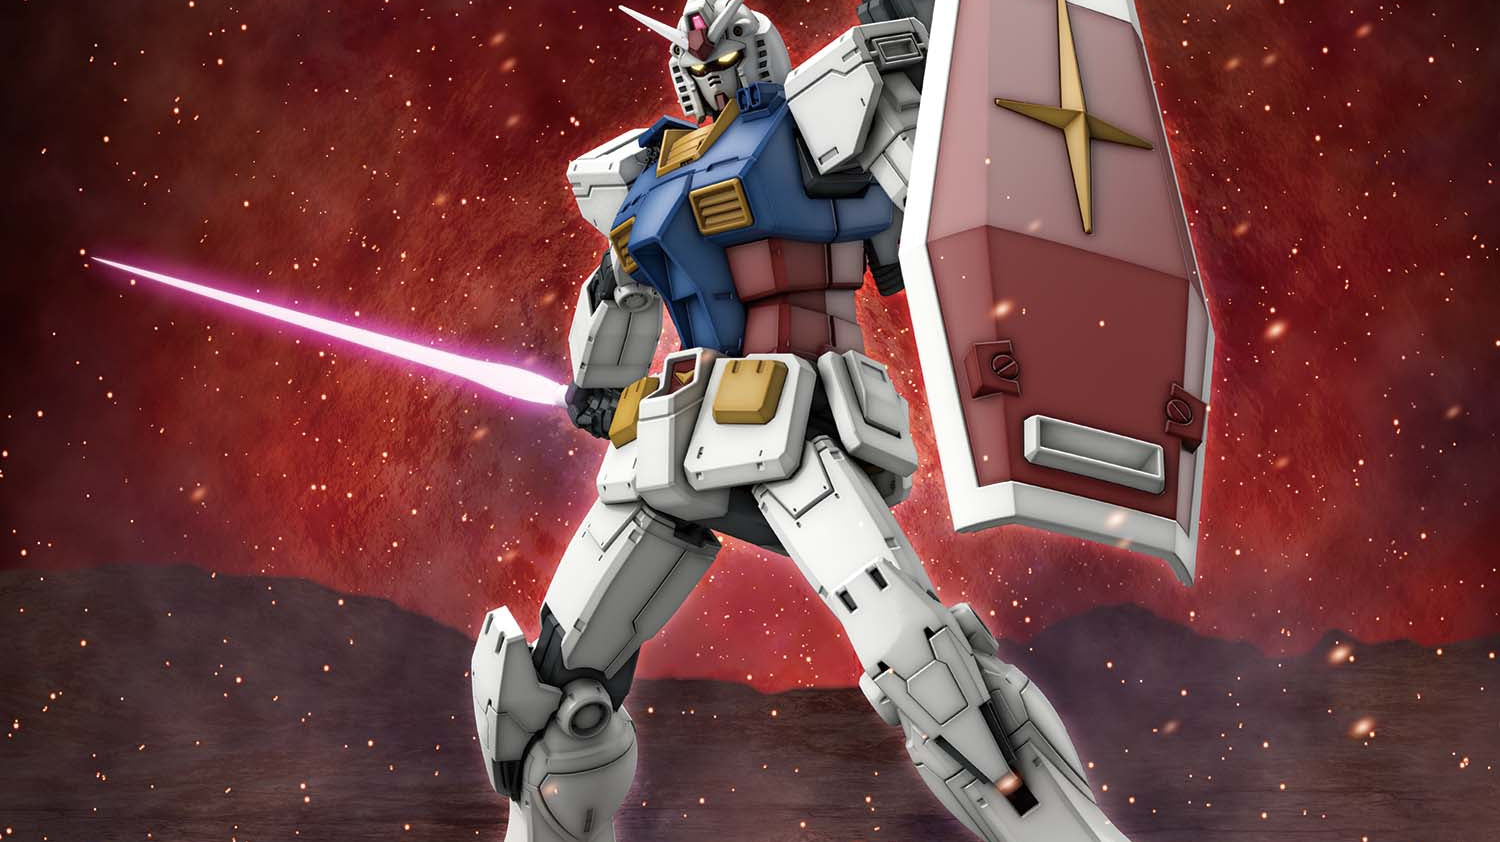 HG RX-78-02 Gundam (Gundam The Origin Ver.)